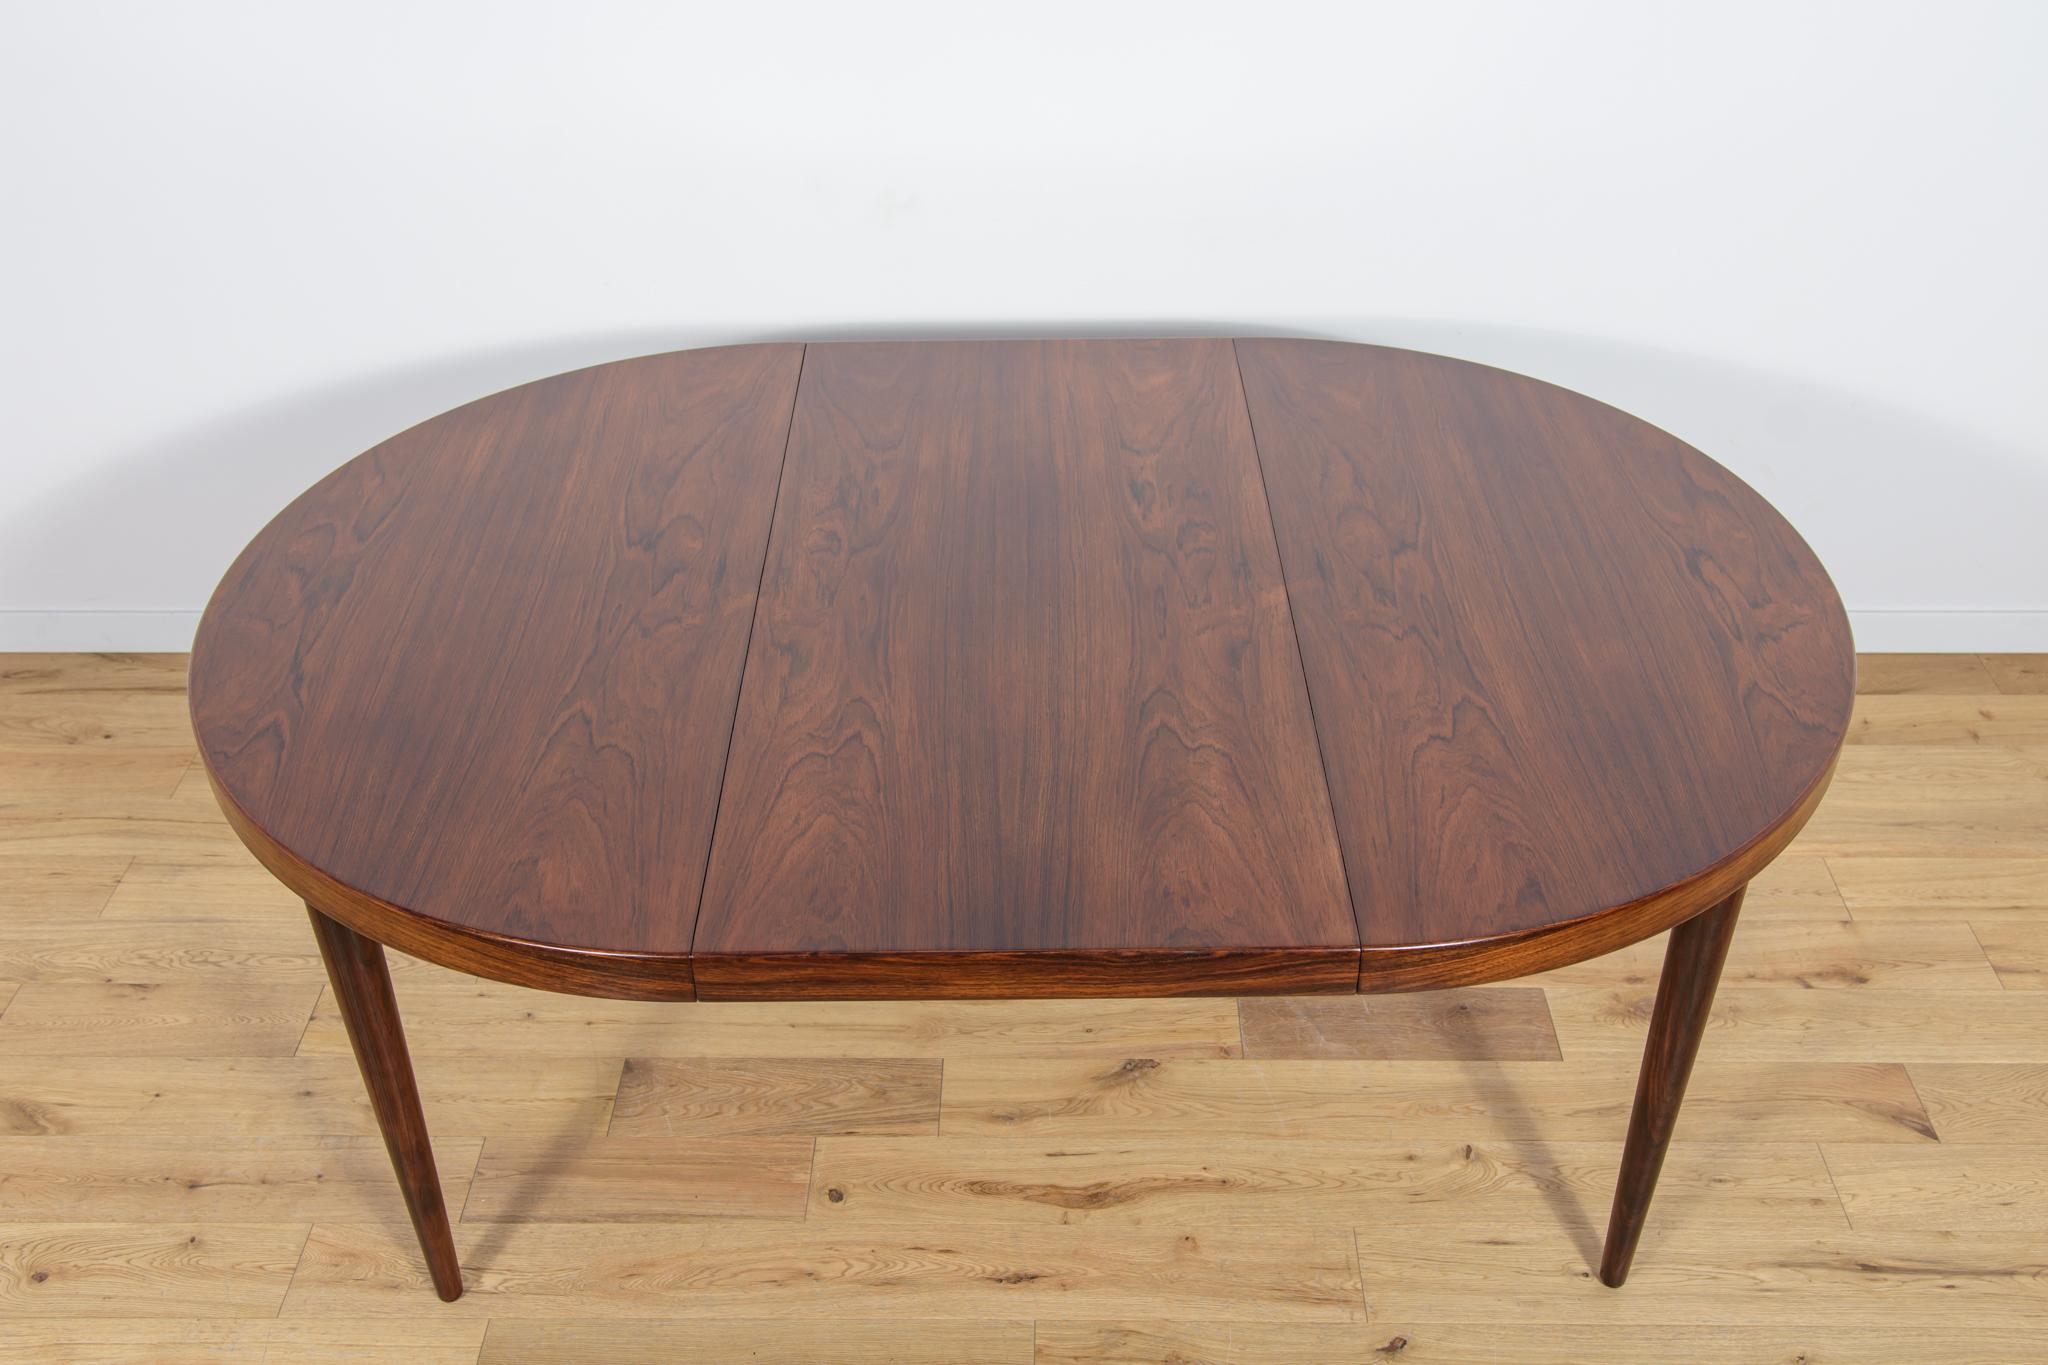  Mid-Century Extendable Rosewood Dining Table by Kai Kristiansen for Feldballes  For Sale 2